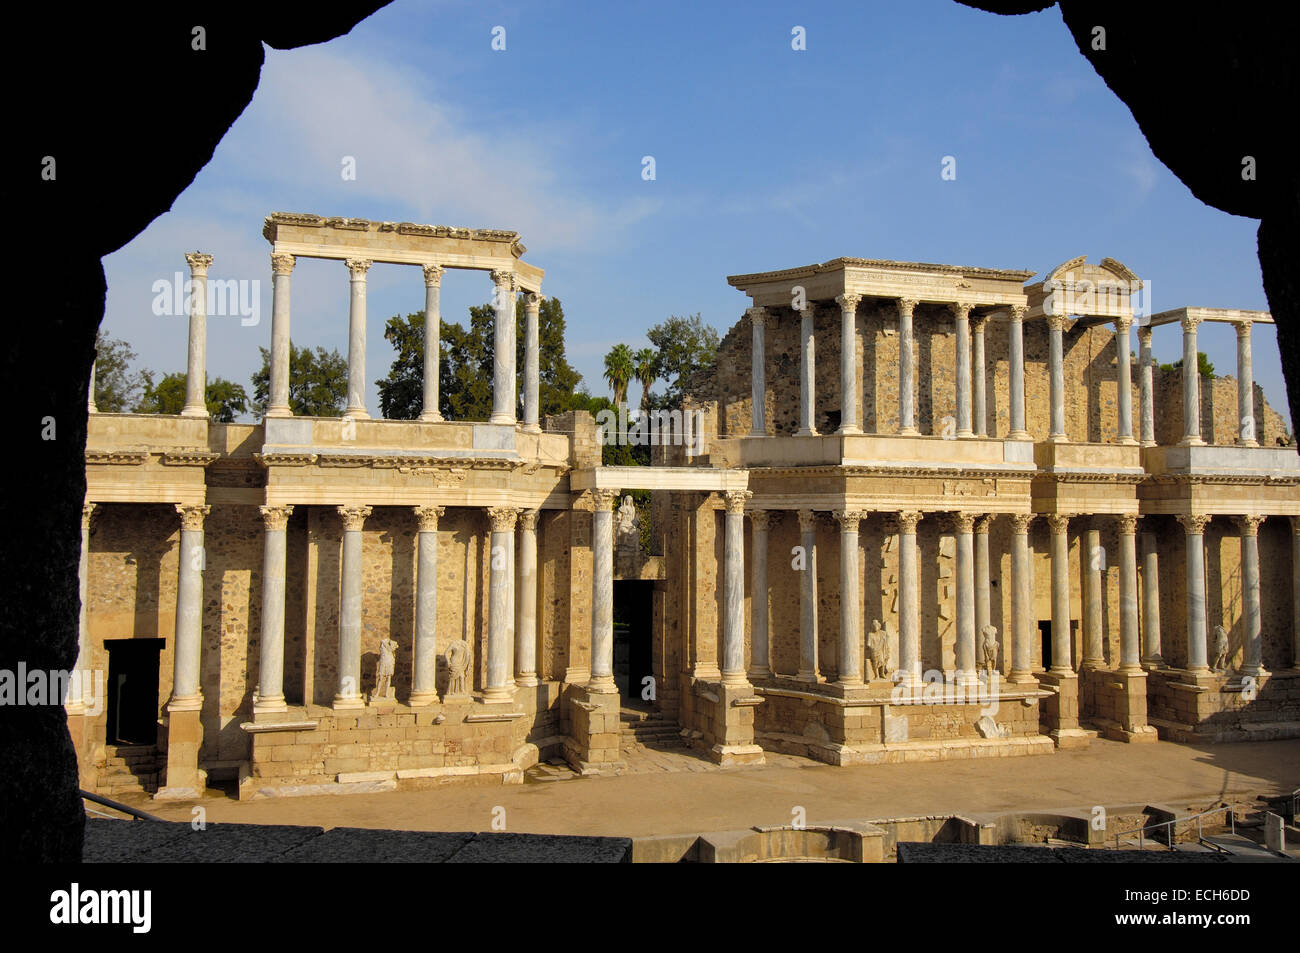 Ruins, theater in the old Roman city Emerita Augusta, Ruta de la Plata, Merida, Badajoz province, Spain, Europe Stock Photo